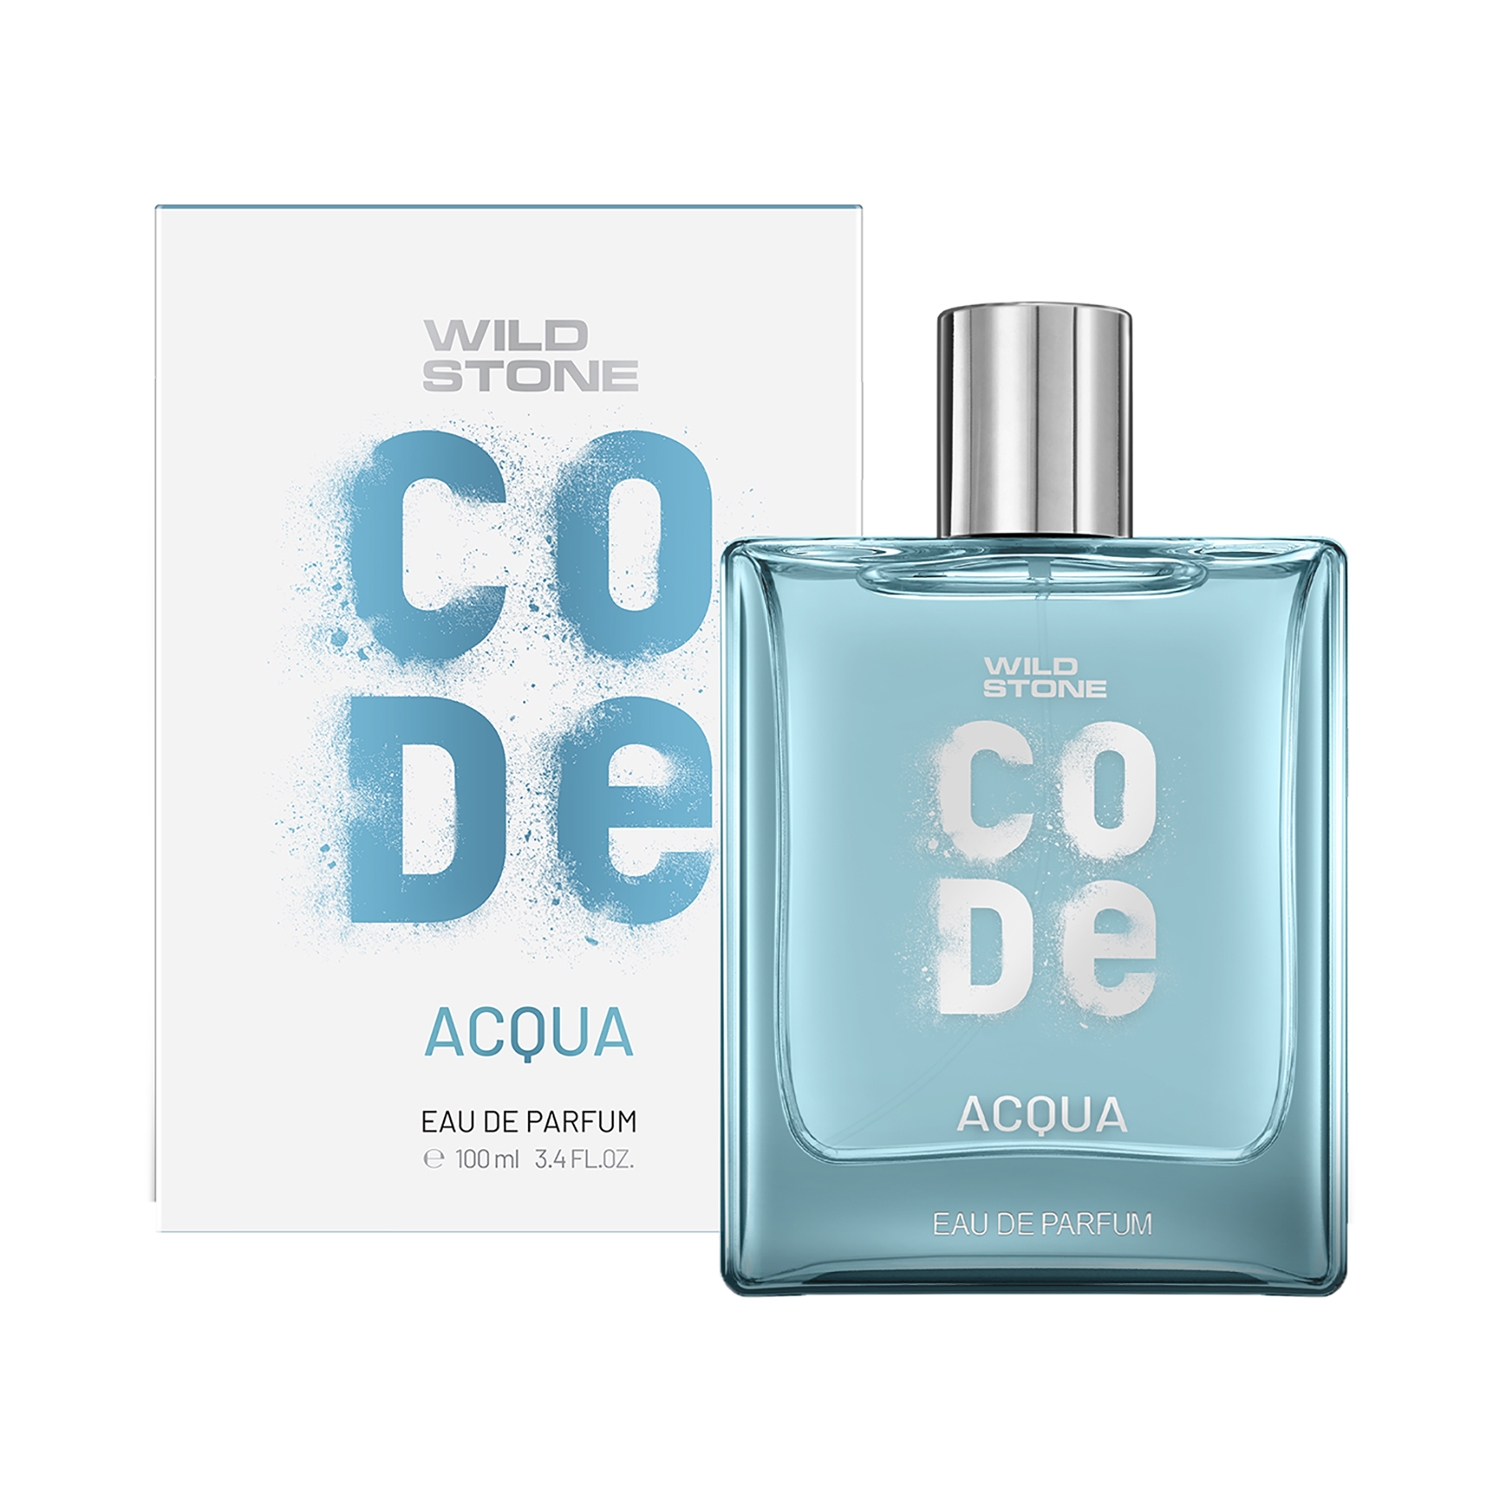 Wild Stone Code Acqua Eau De Parfum (100ml)